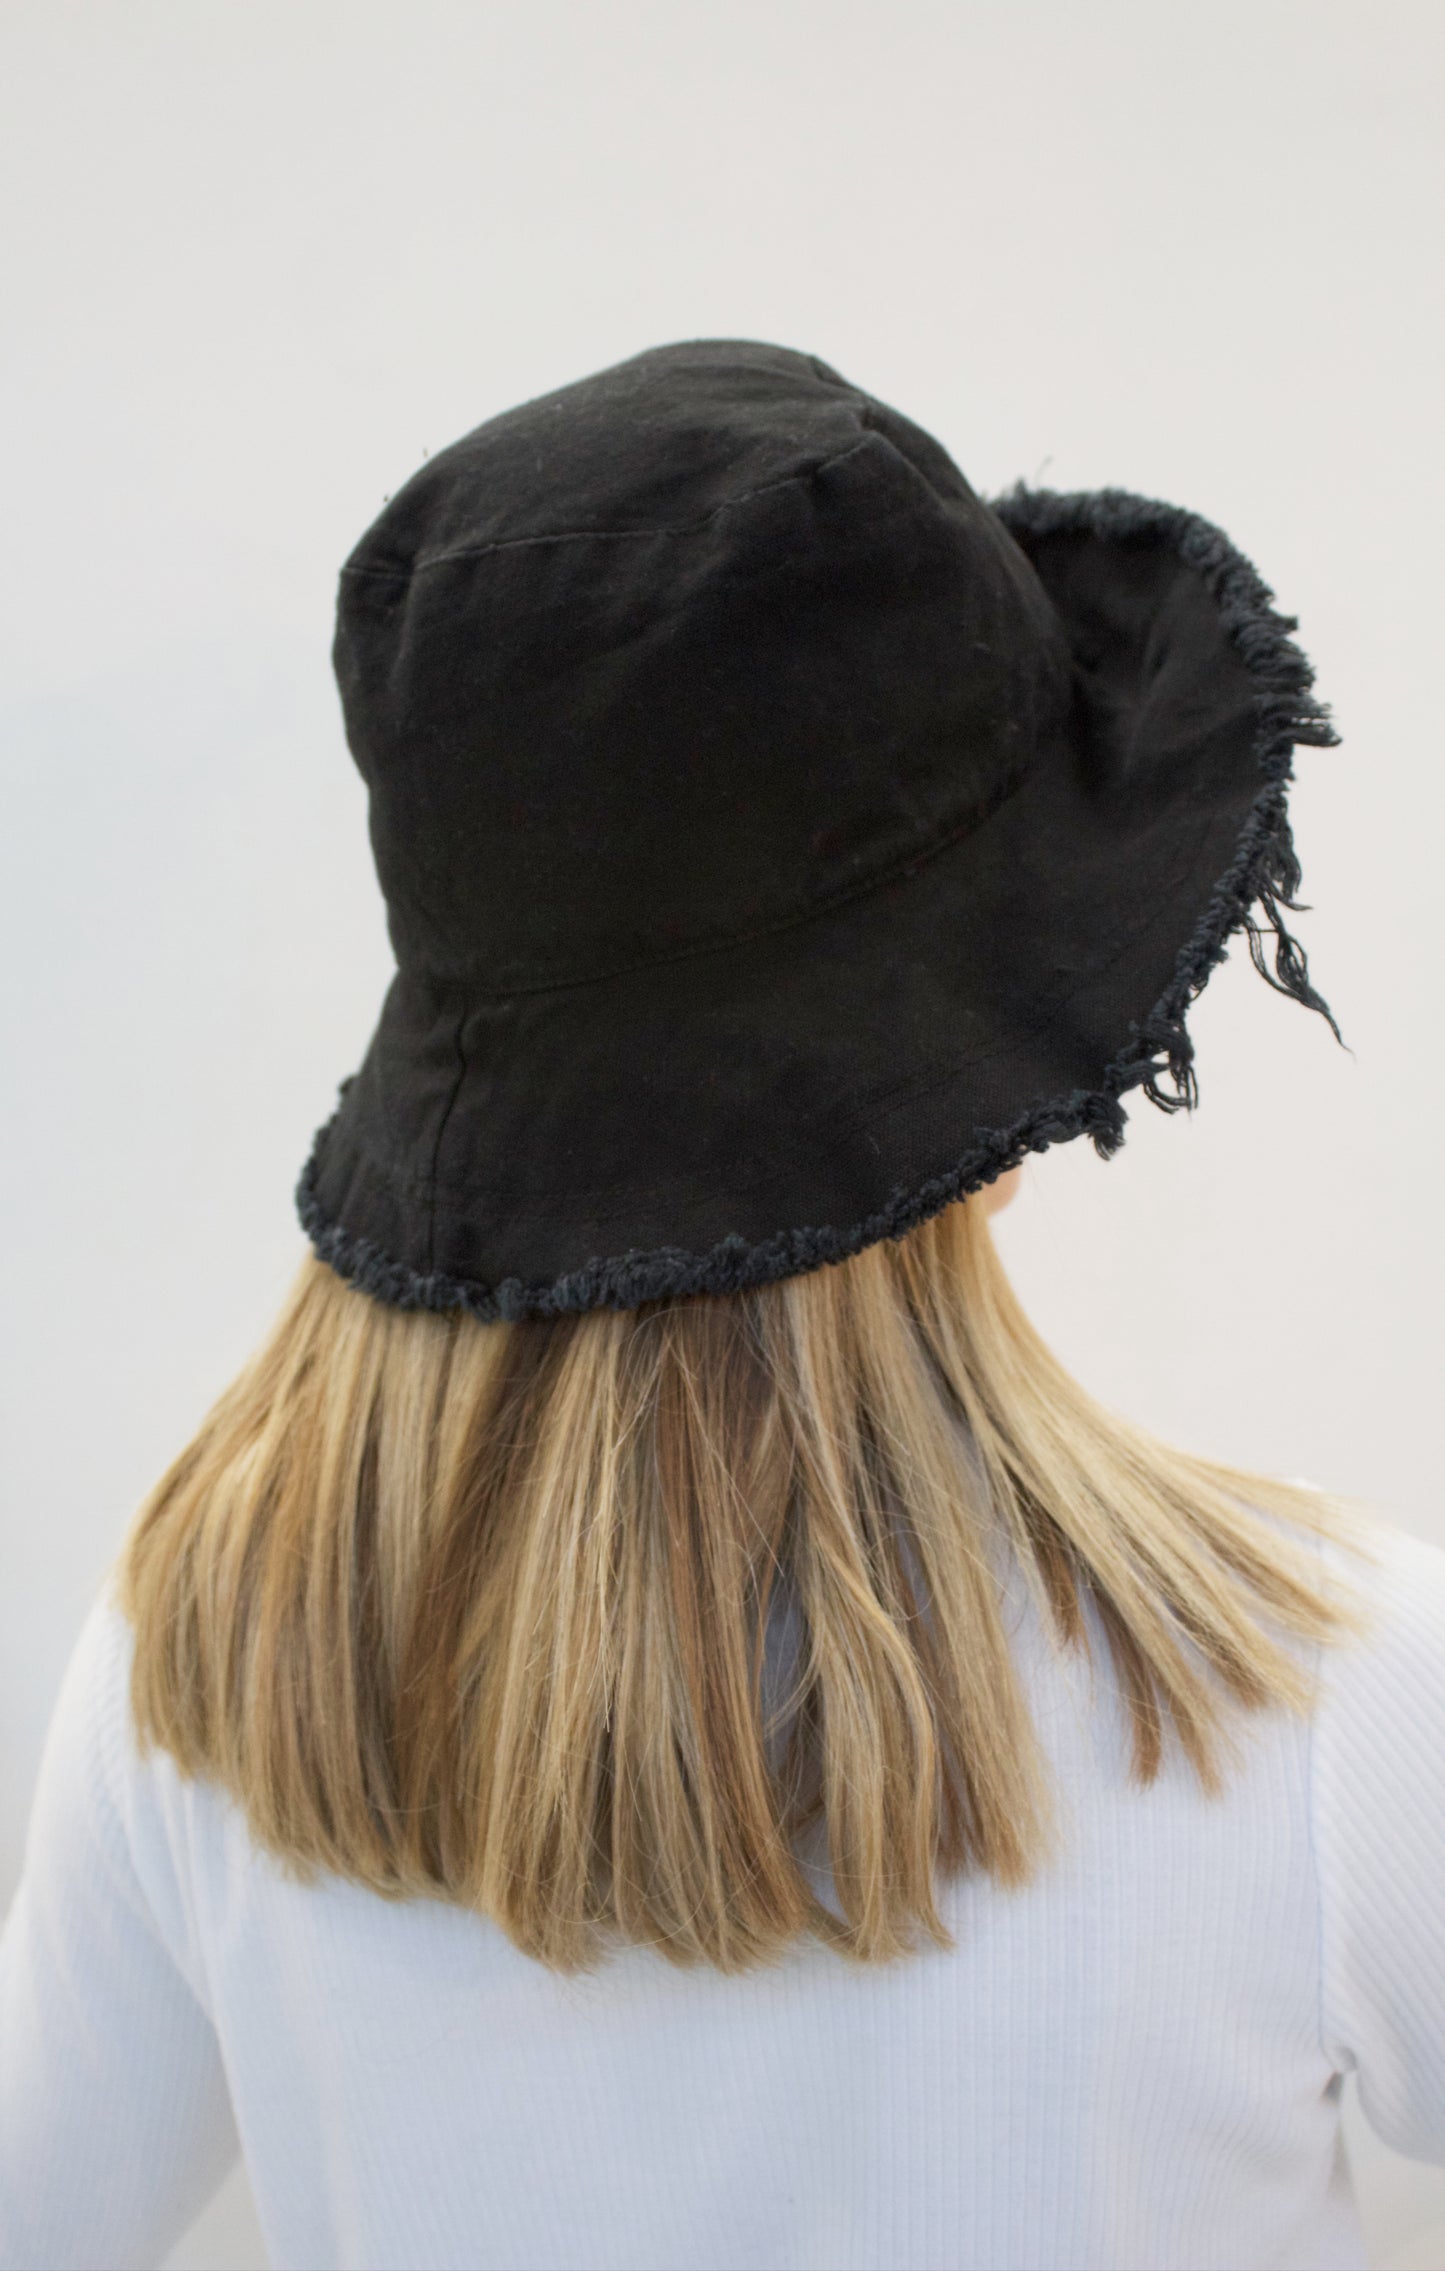 EVA Black up-cycled cotton hat